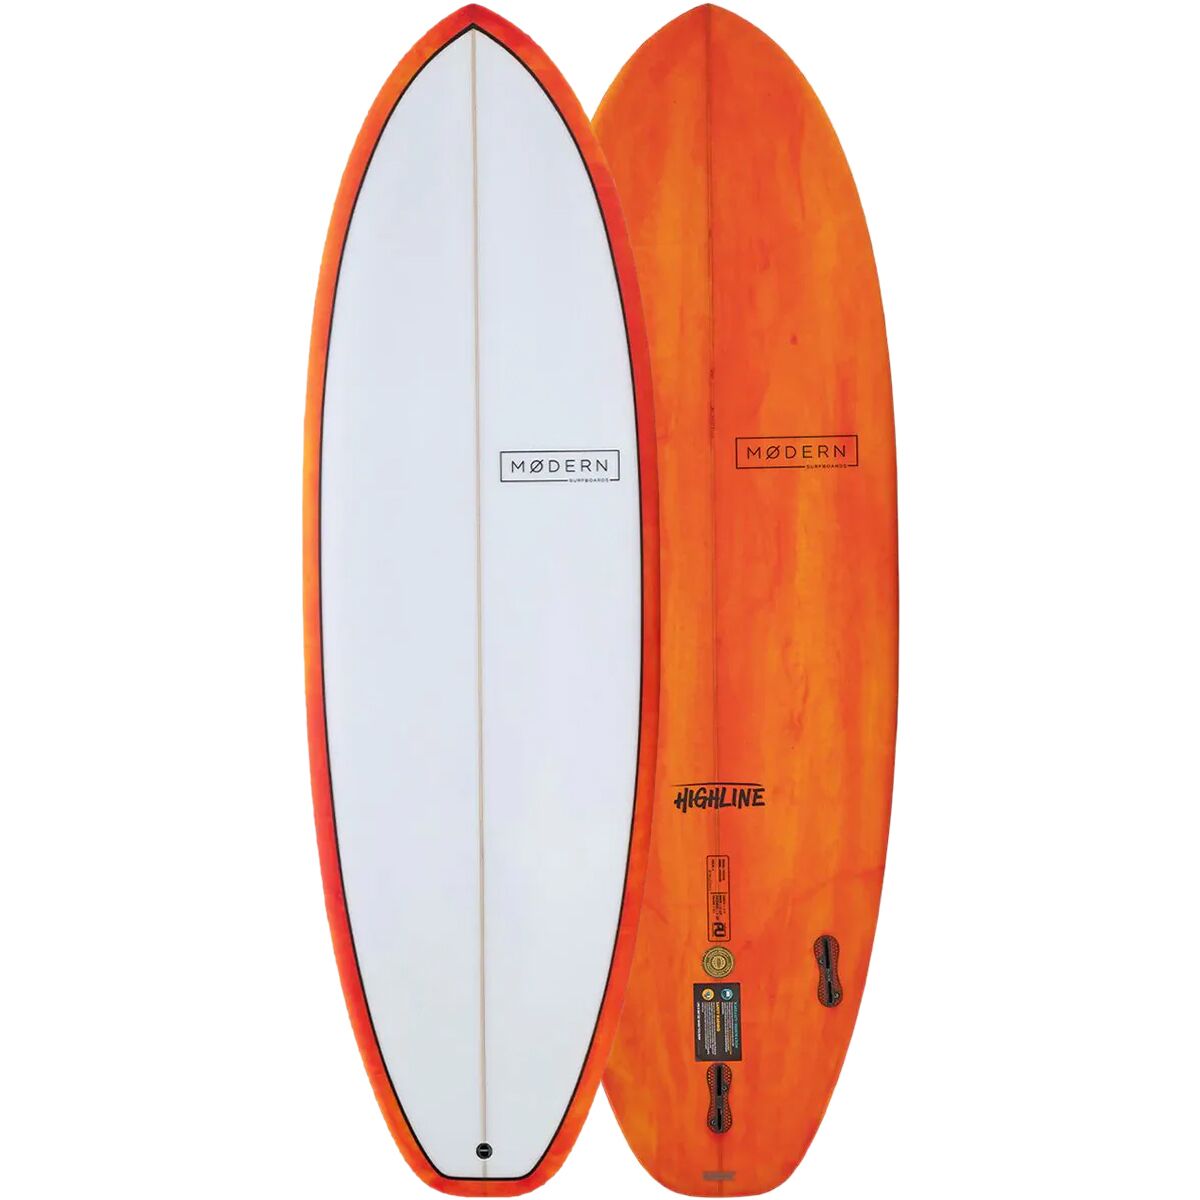 Modern Highline PU Surfboard - Surf